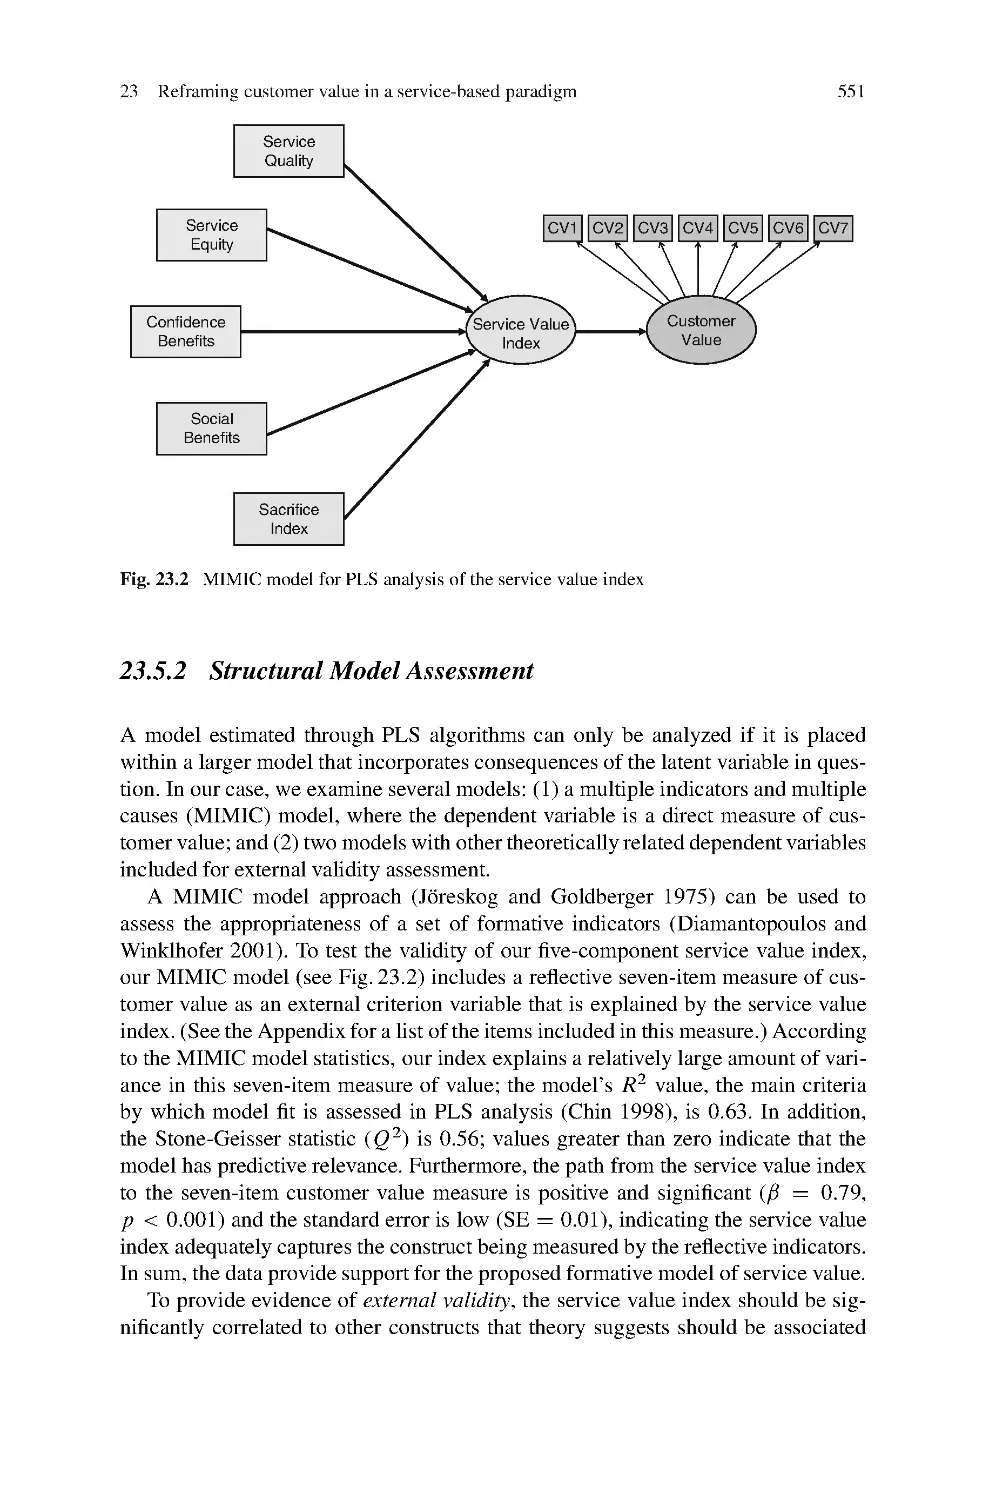 23.5.2 Structural Model Assessment